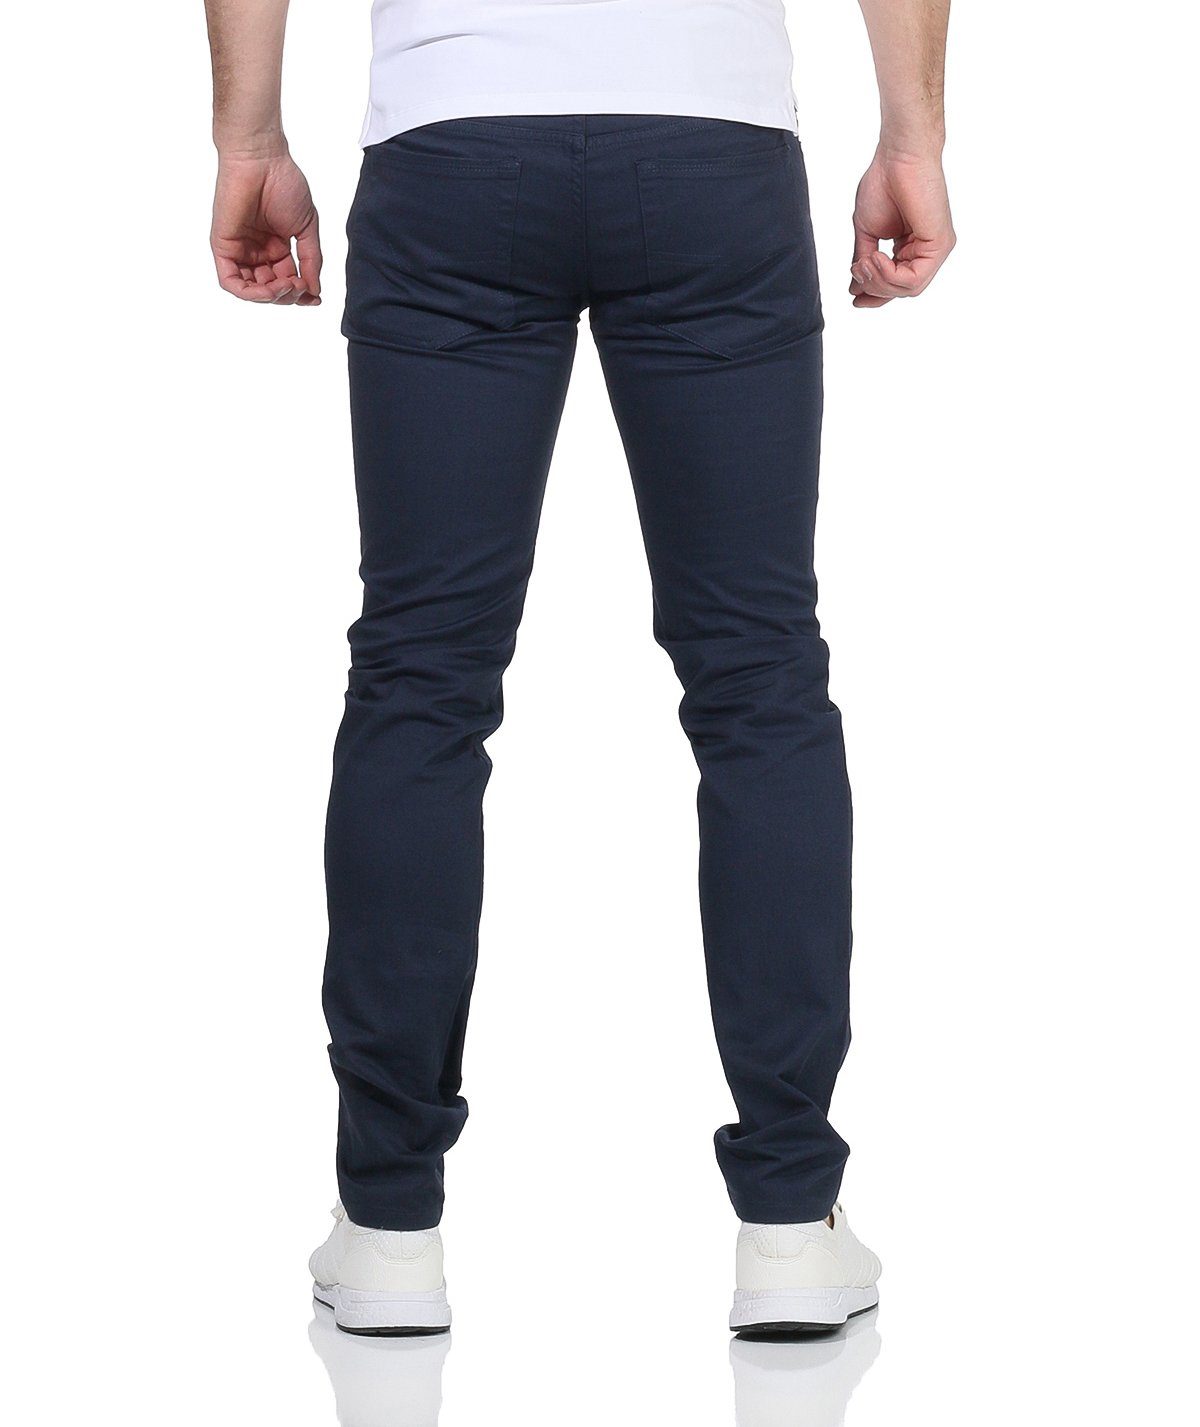 Skinny-fit-Jeans 32 R-TROXER-A Hose, Länge: 5-Pocket-Style, inch Sommer, Einheitsgröße Diesel Diesel Herren Navy Skinny-fit-Jeans